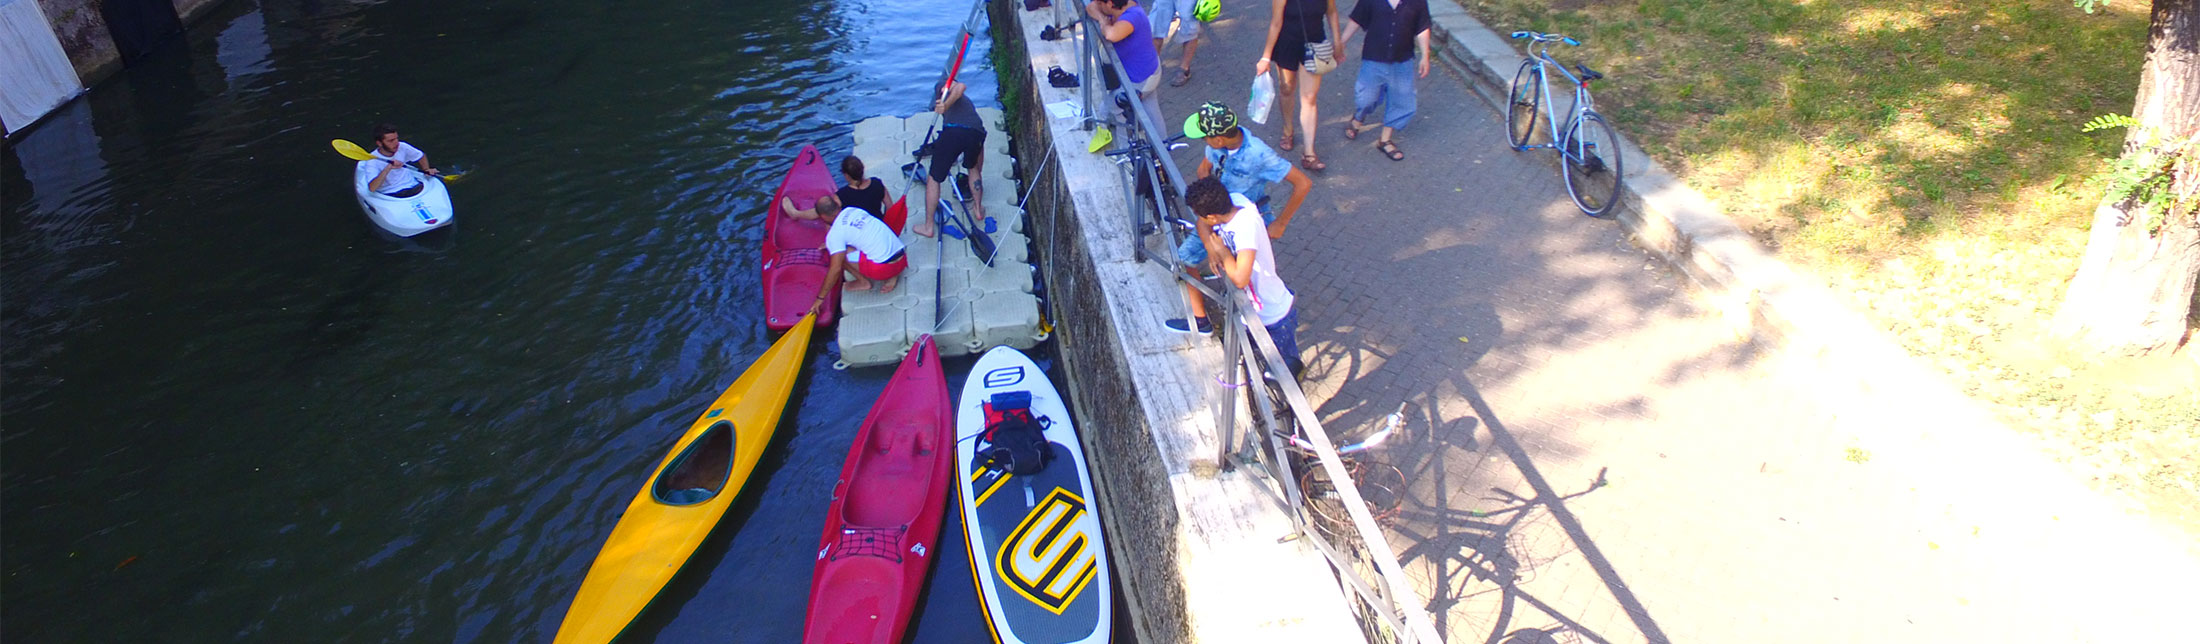 KAYAK OPEN DAYS: le canoe sul Naviglio Martesana